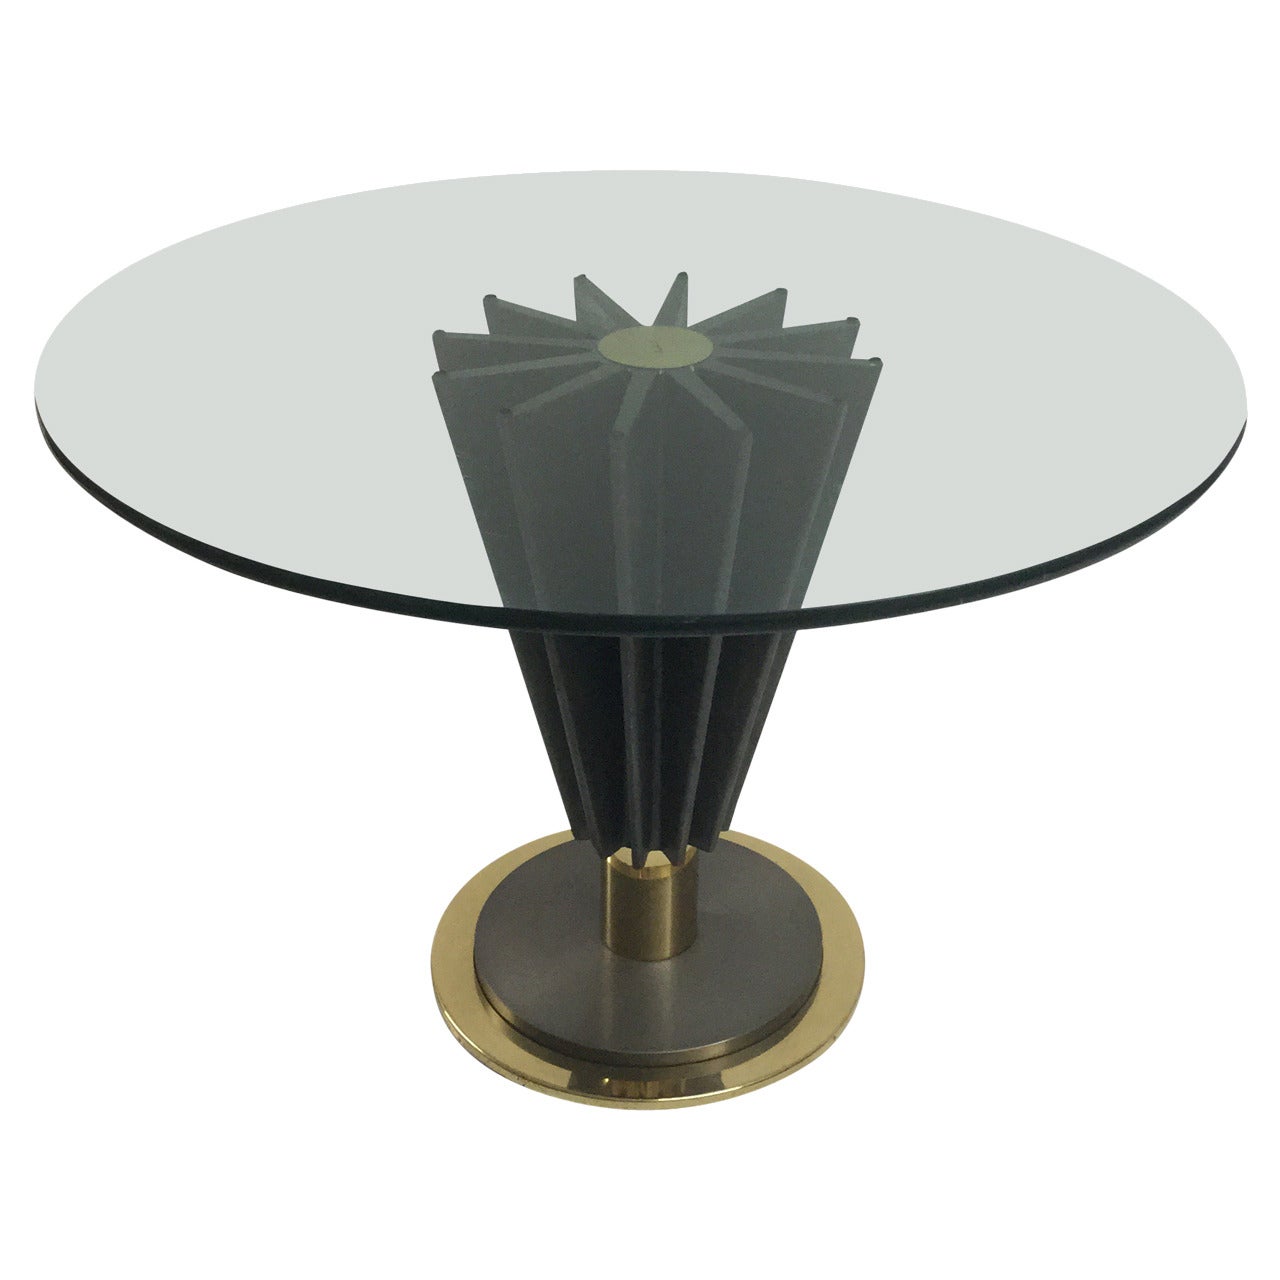 Pierre Cardin Table For Sale